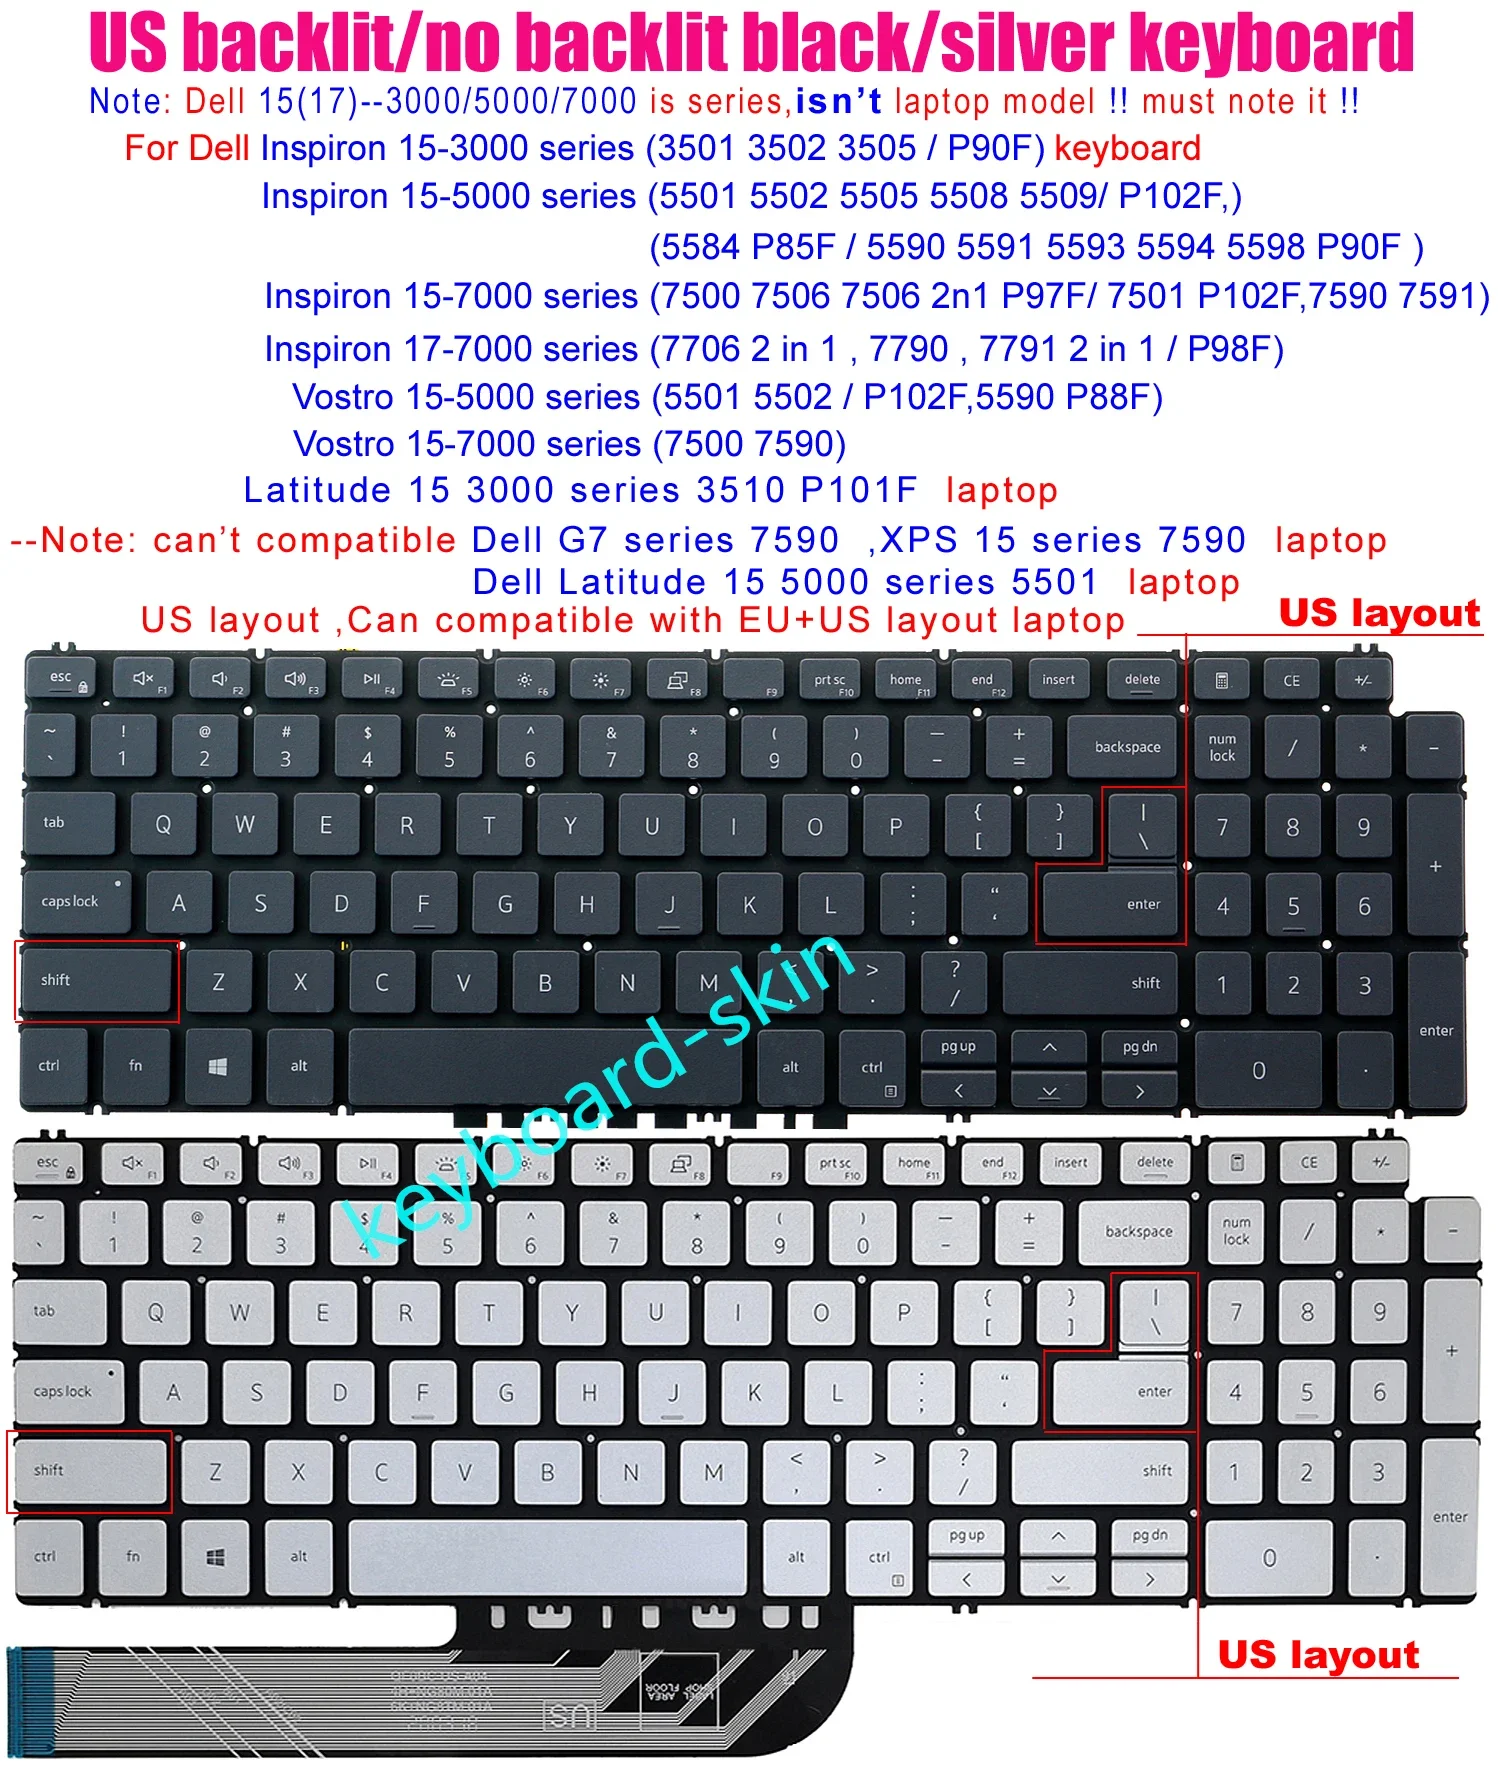 

US Keyboard no-Backlit/Backlit for Dell Inspiron 15-5501 5502 5505 5508 15-5509 P102F 5584 P85F 5590 5591 5593 5594 5598 P90F